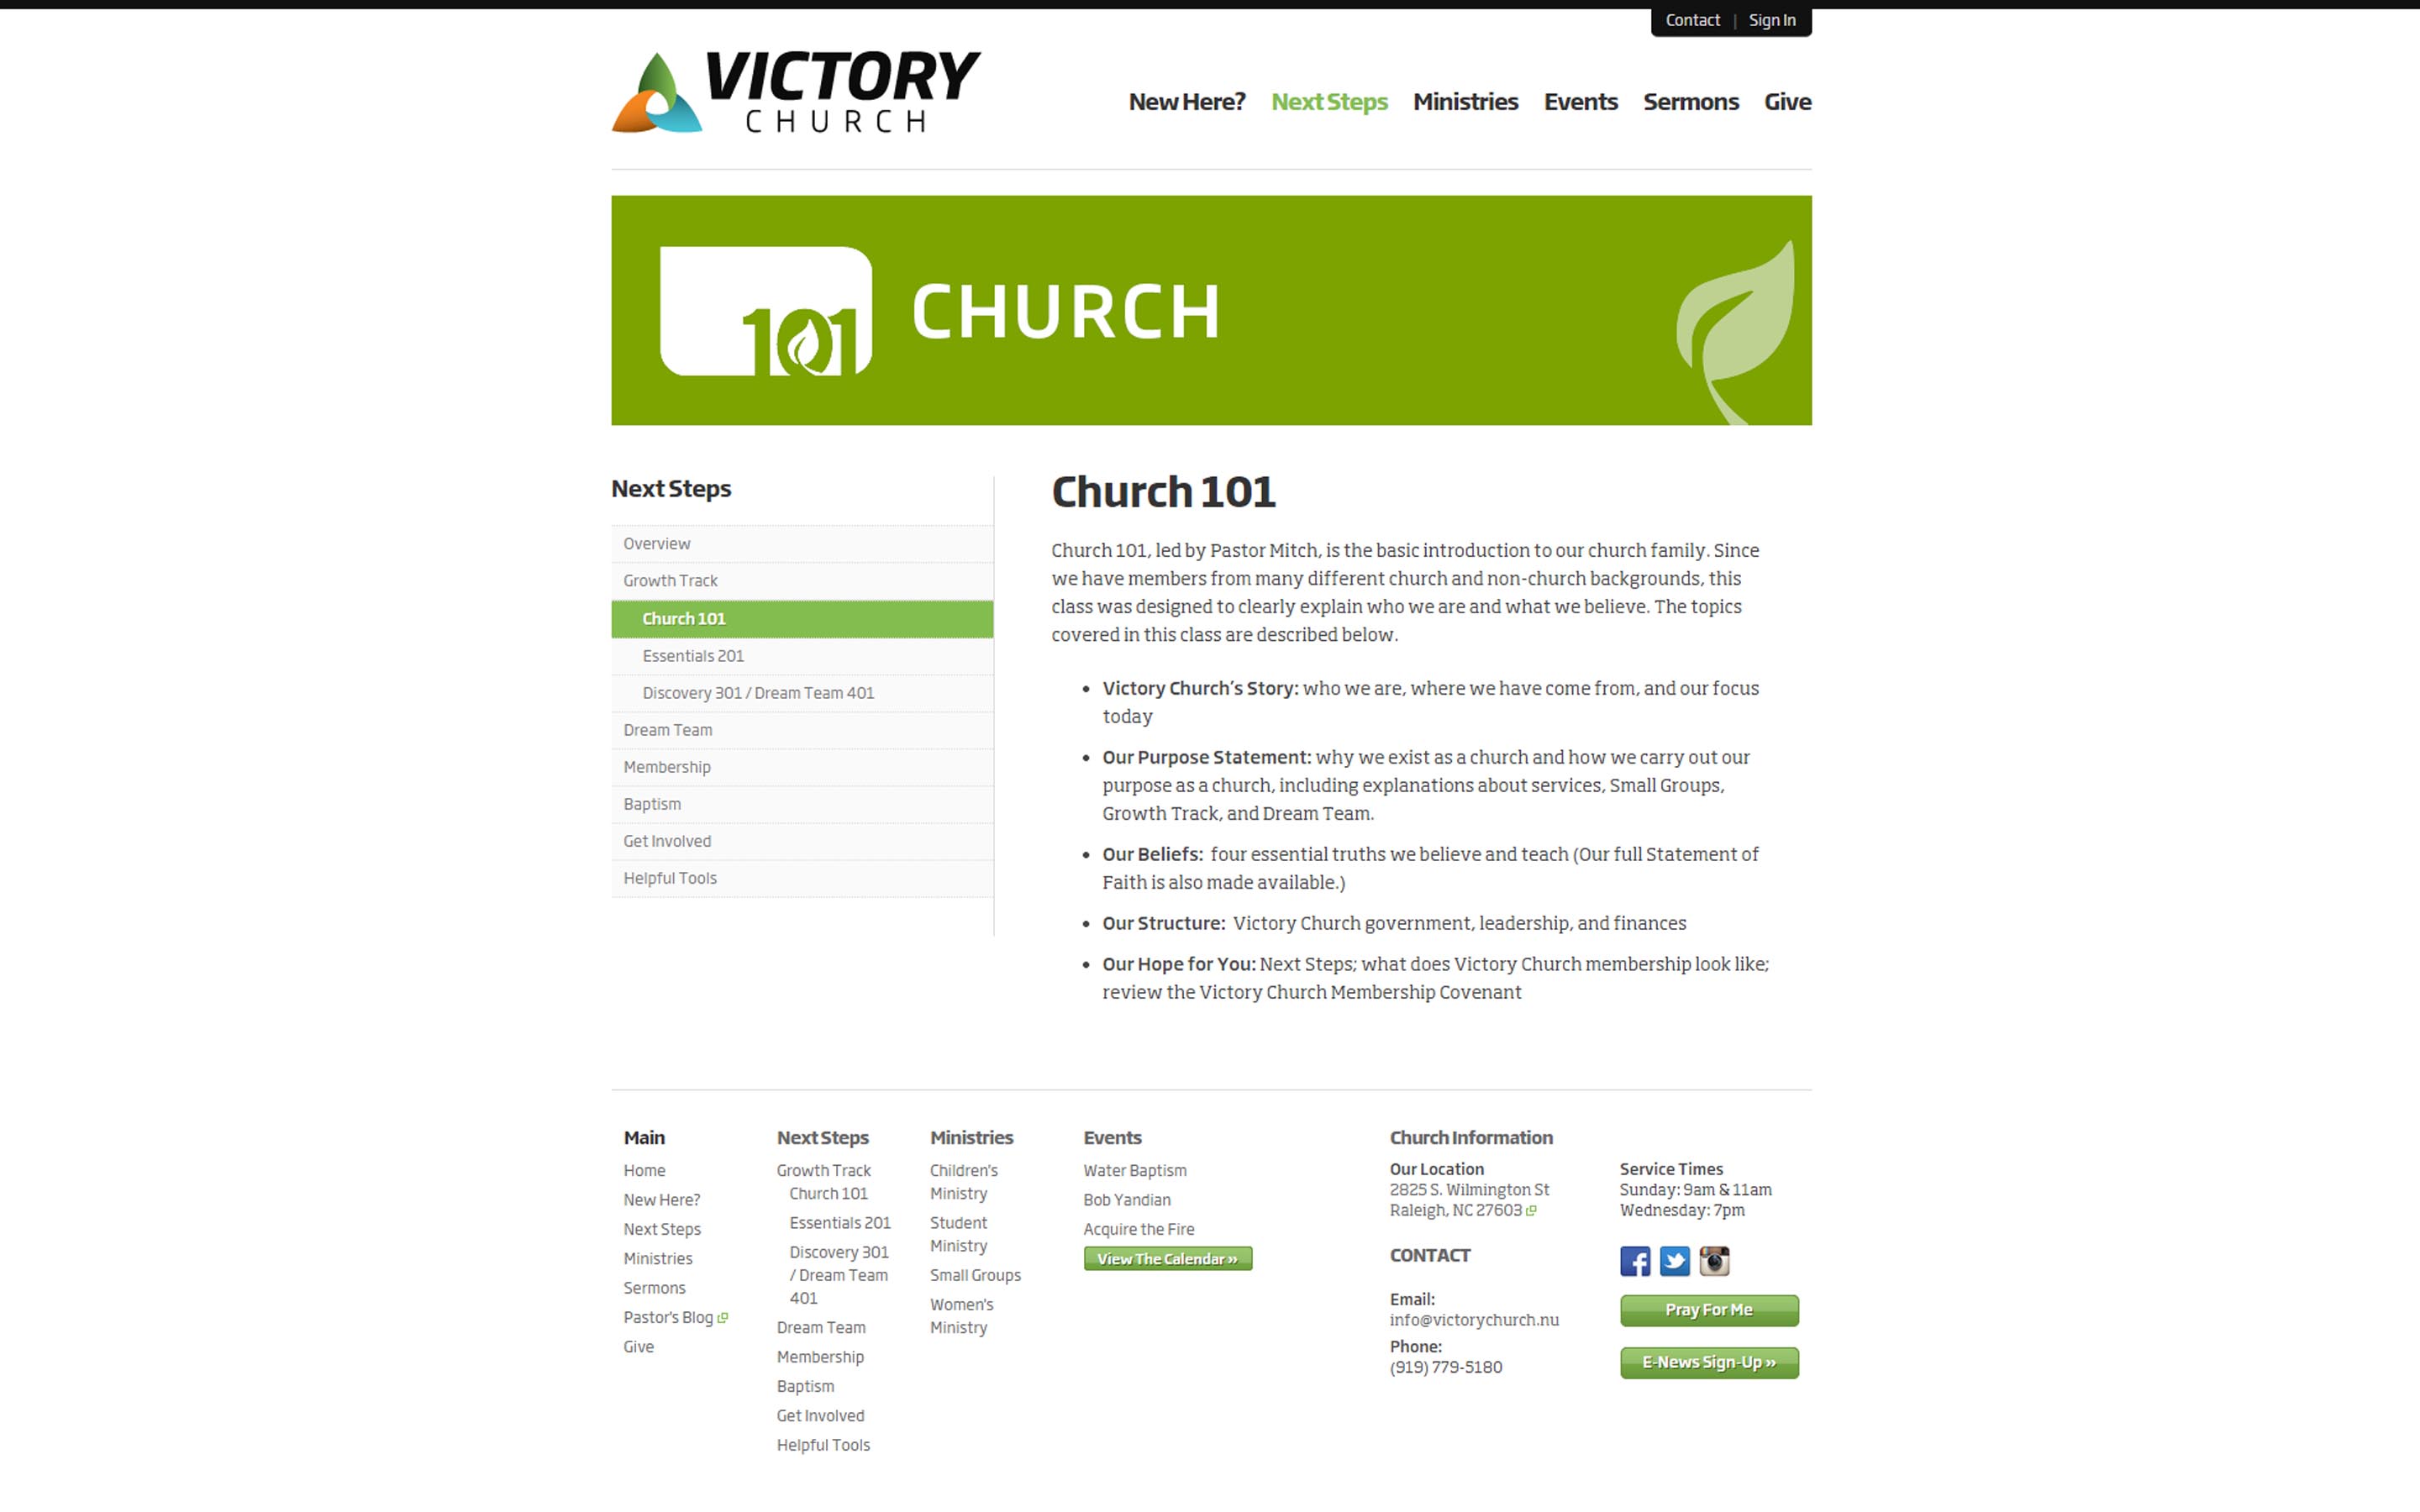 TomLowe_Timescapes_ScreenCaps__0011_www.victorychurch.nu_nextsteps_church101